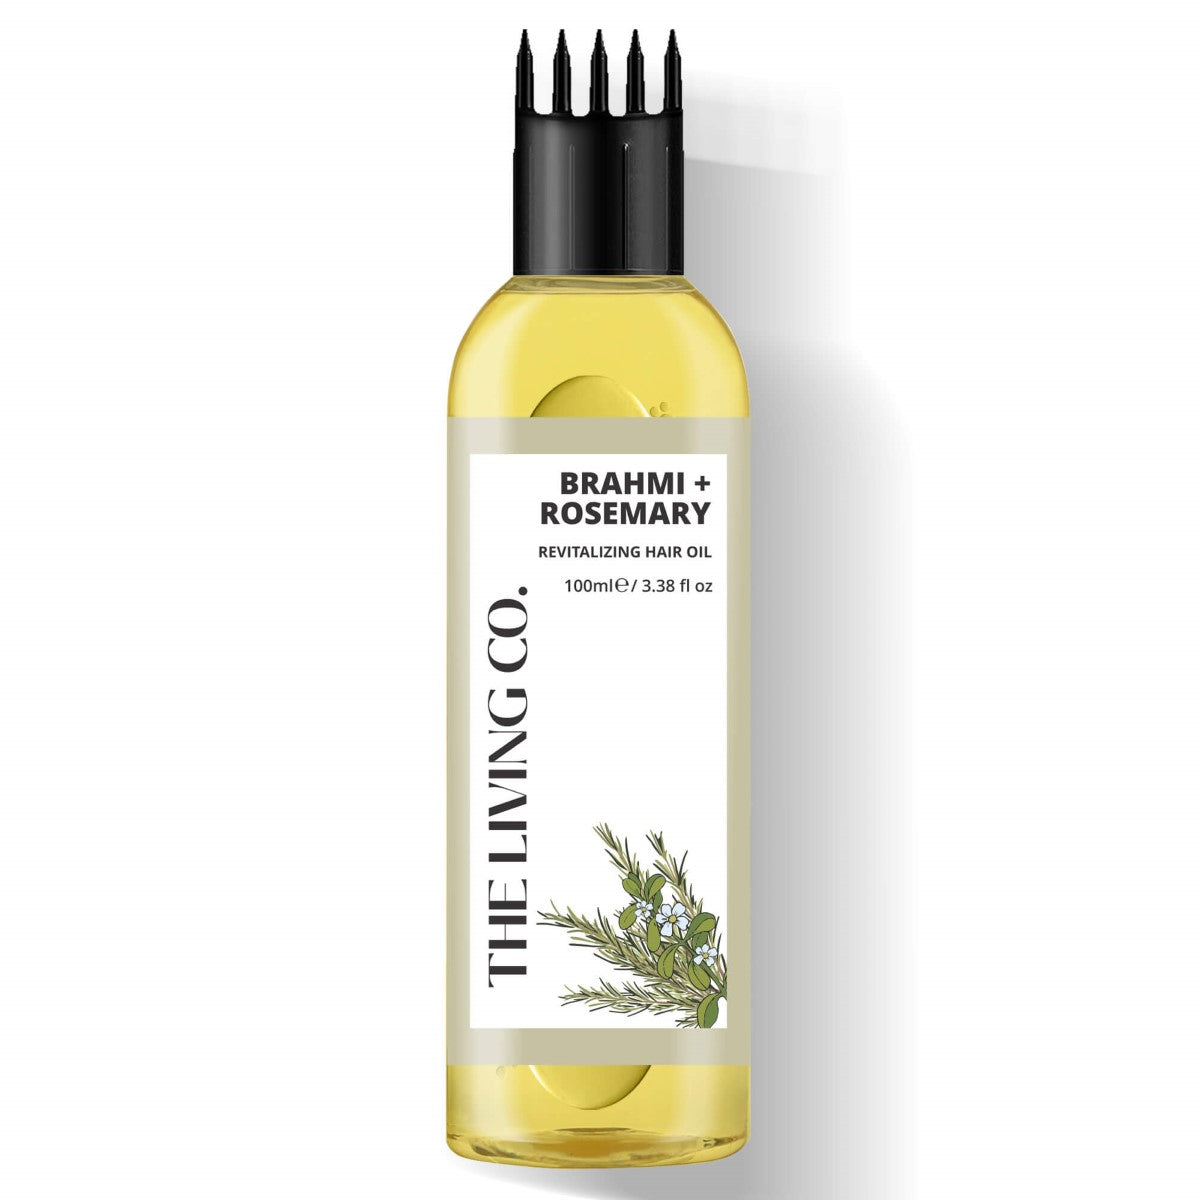 Brahmi + Rosemary Hair Oil